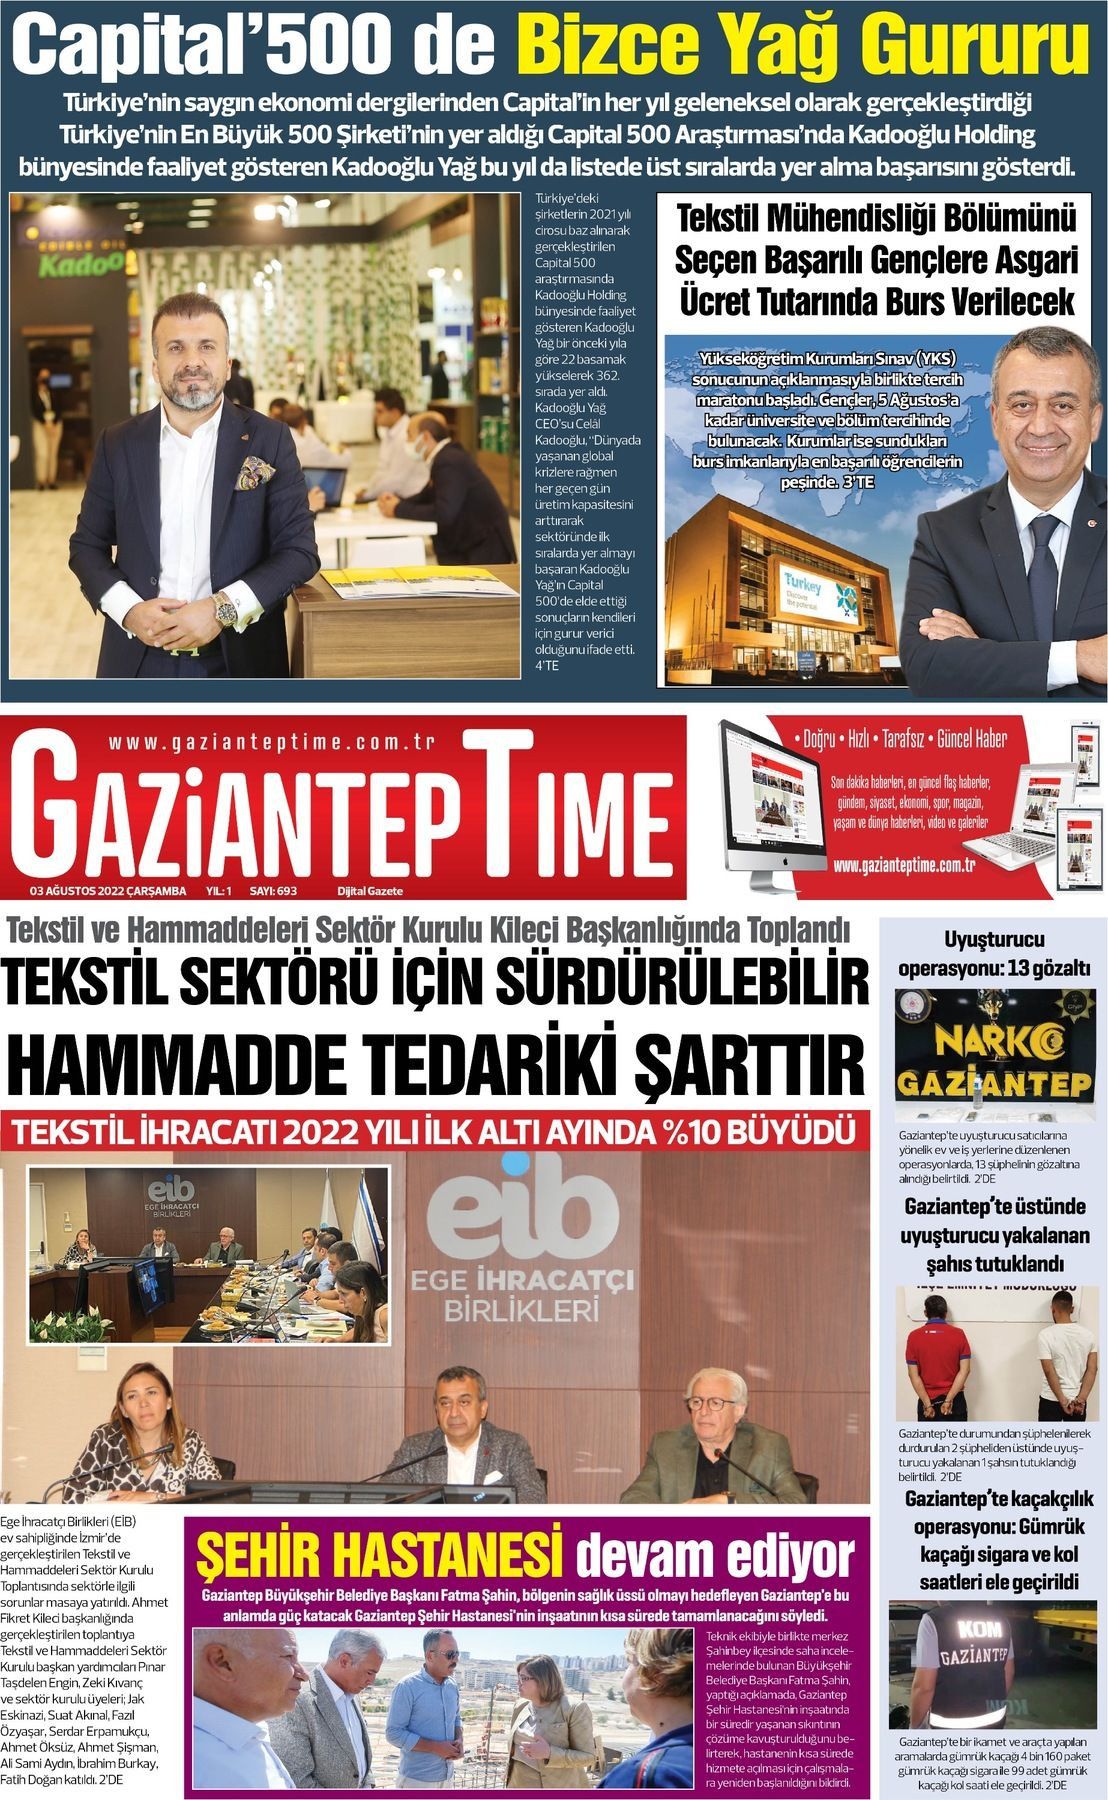 07 Ağustos 2022 Gaziantep Time Gazete Manşeti